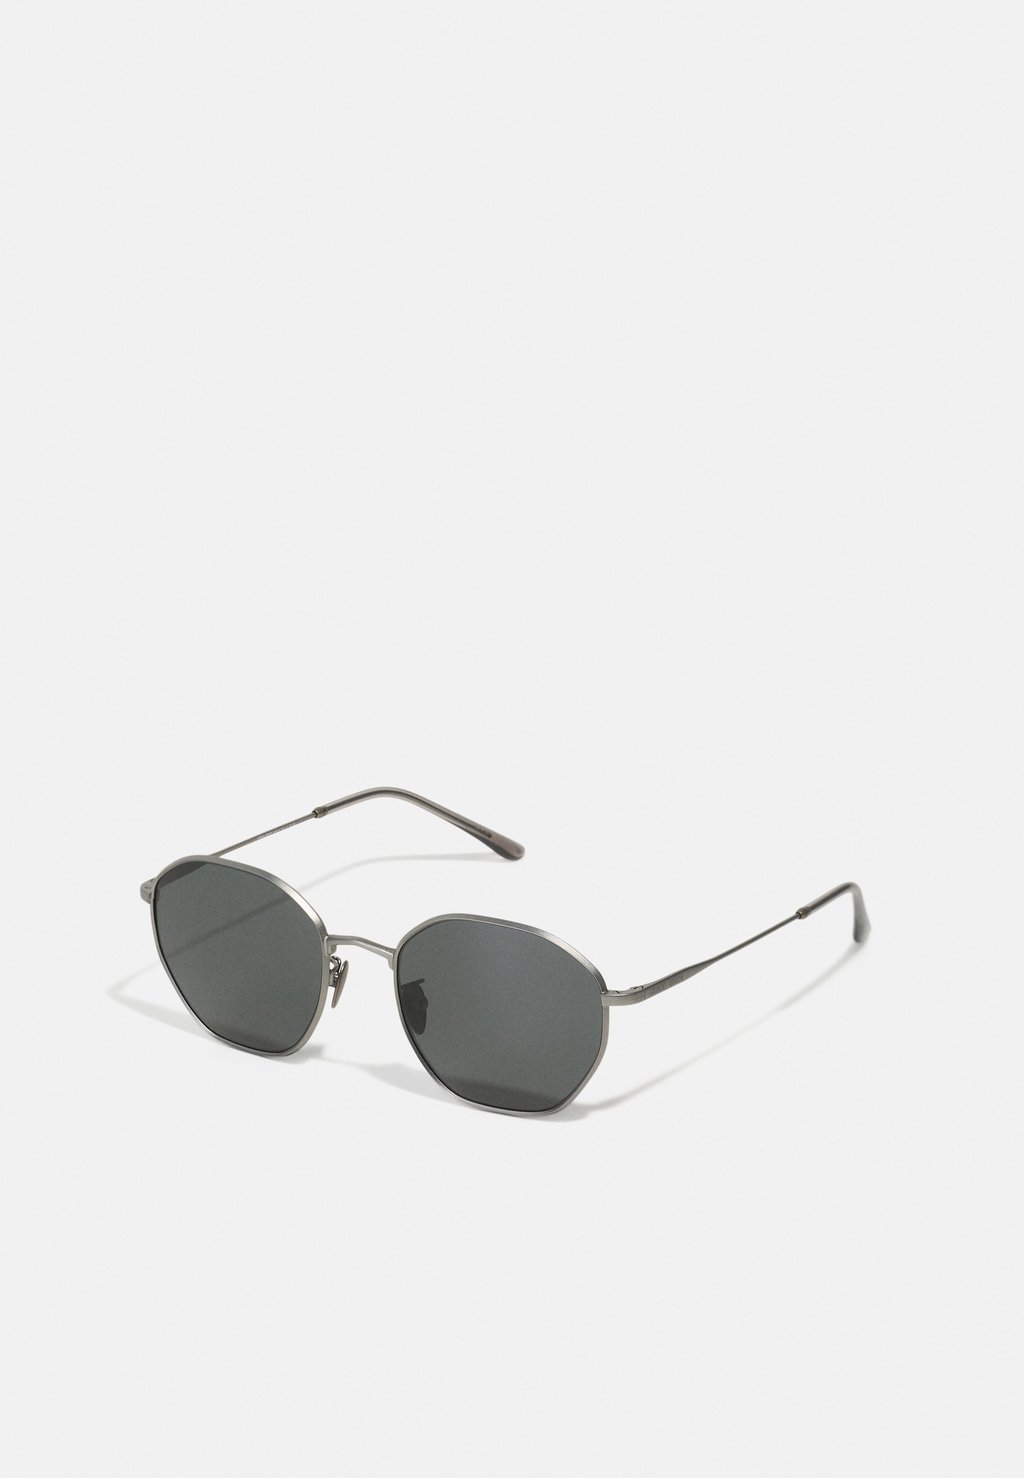 Солнцезащитные очки Giorgio Armani, цвет gun metal